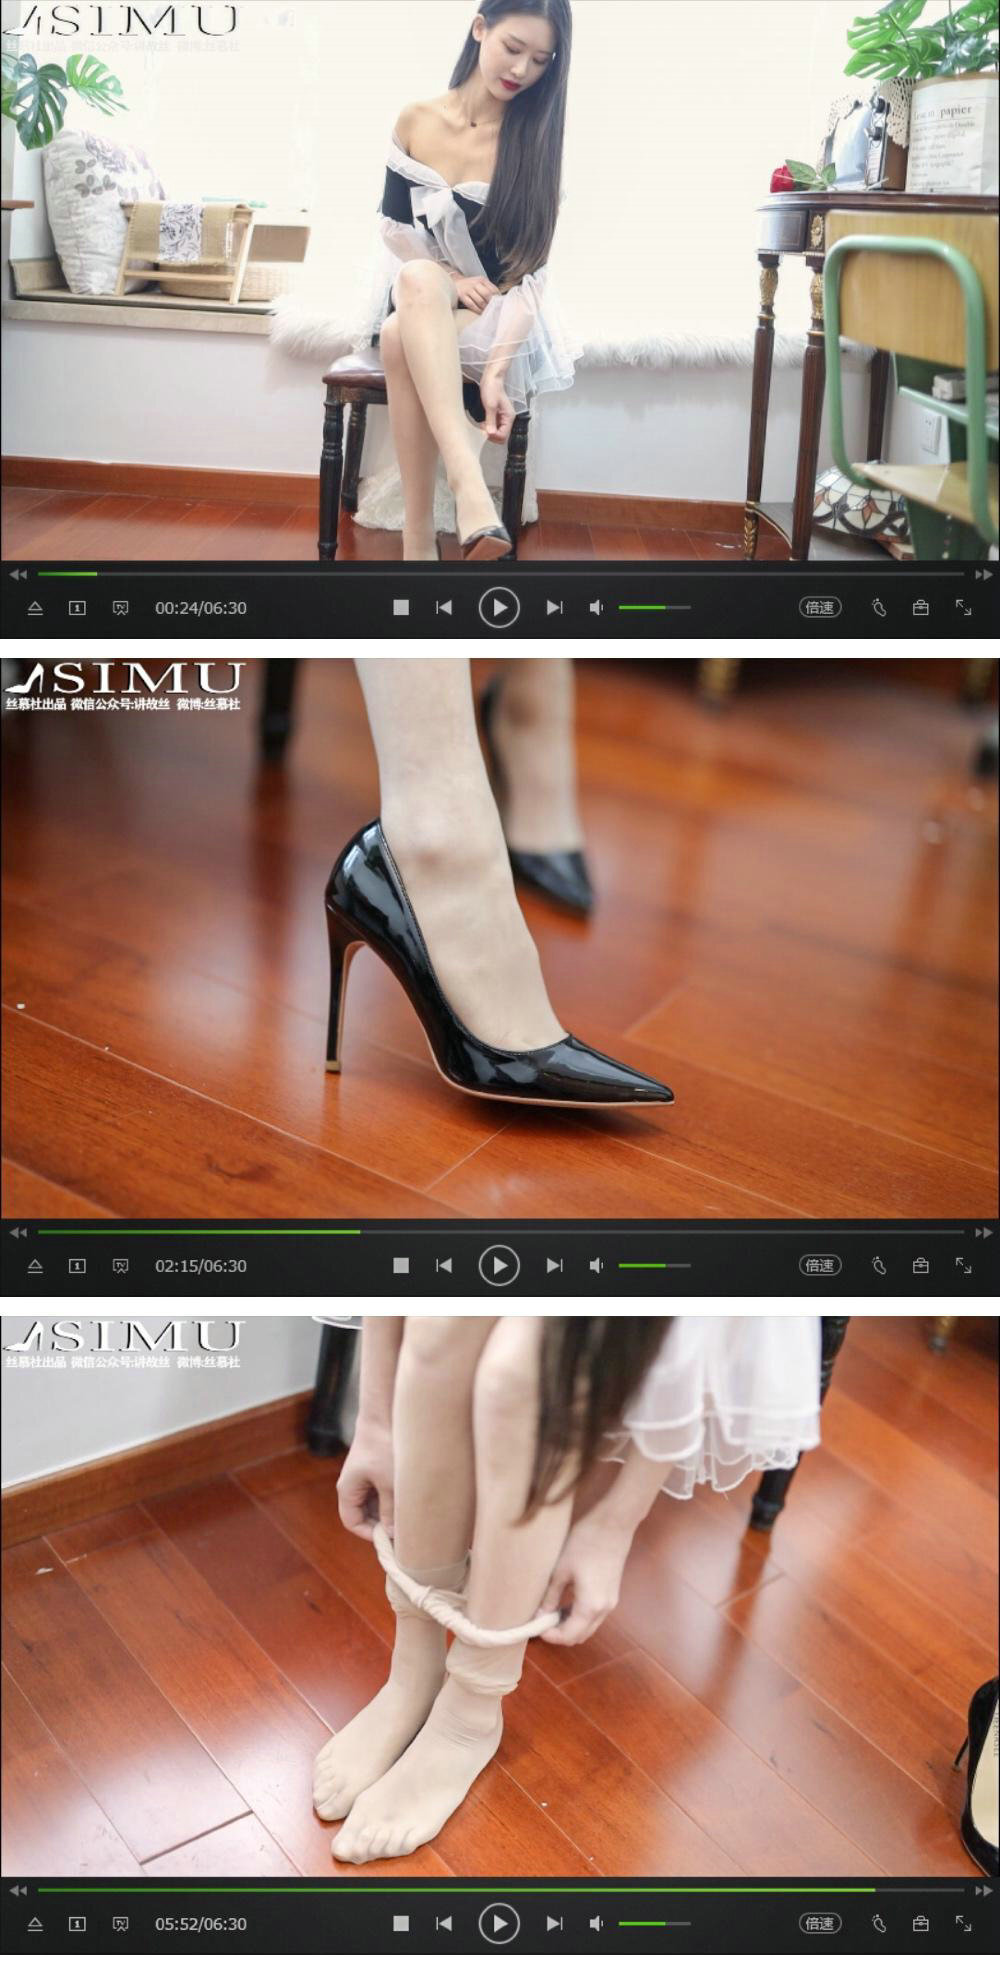 Sm220 new model of SIMU photo - patent leather high heel